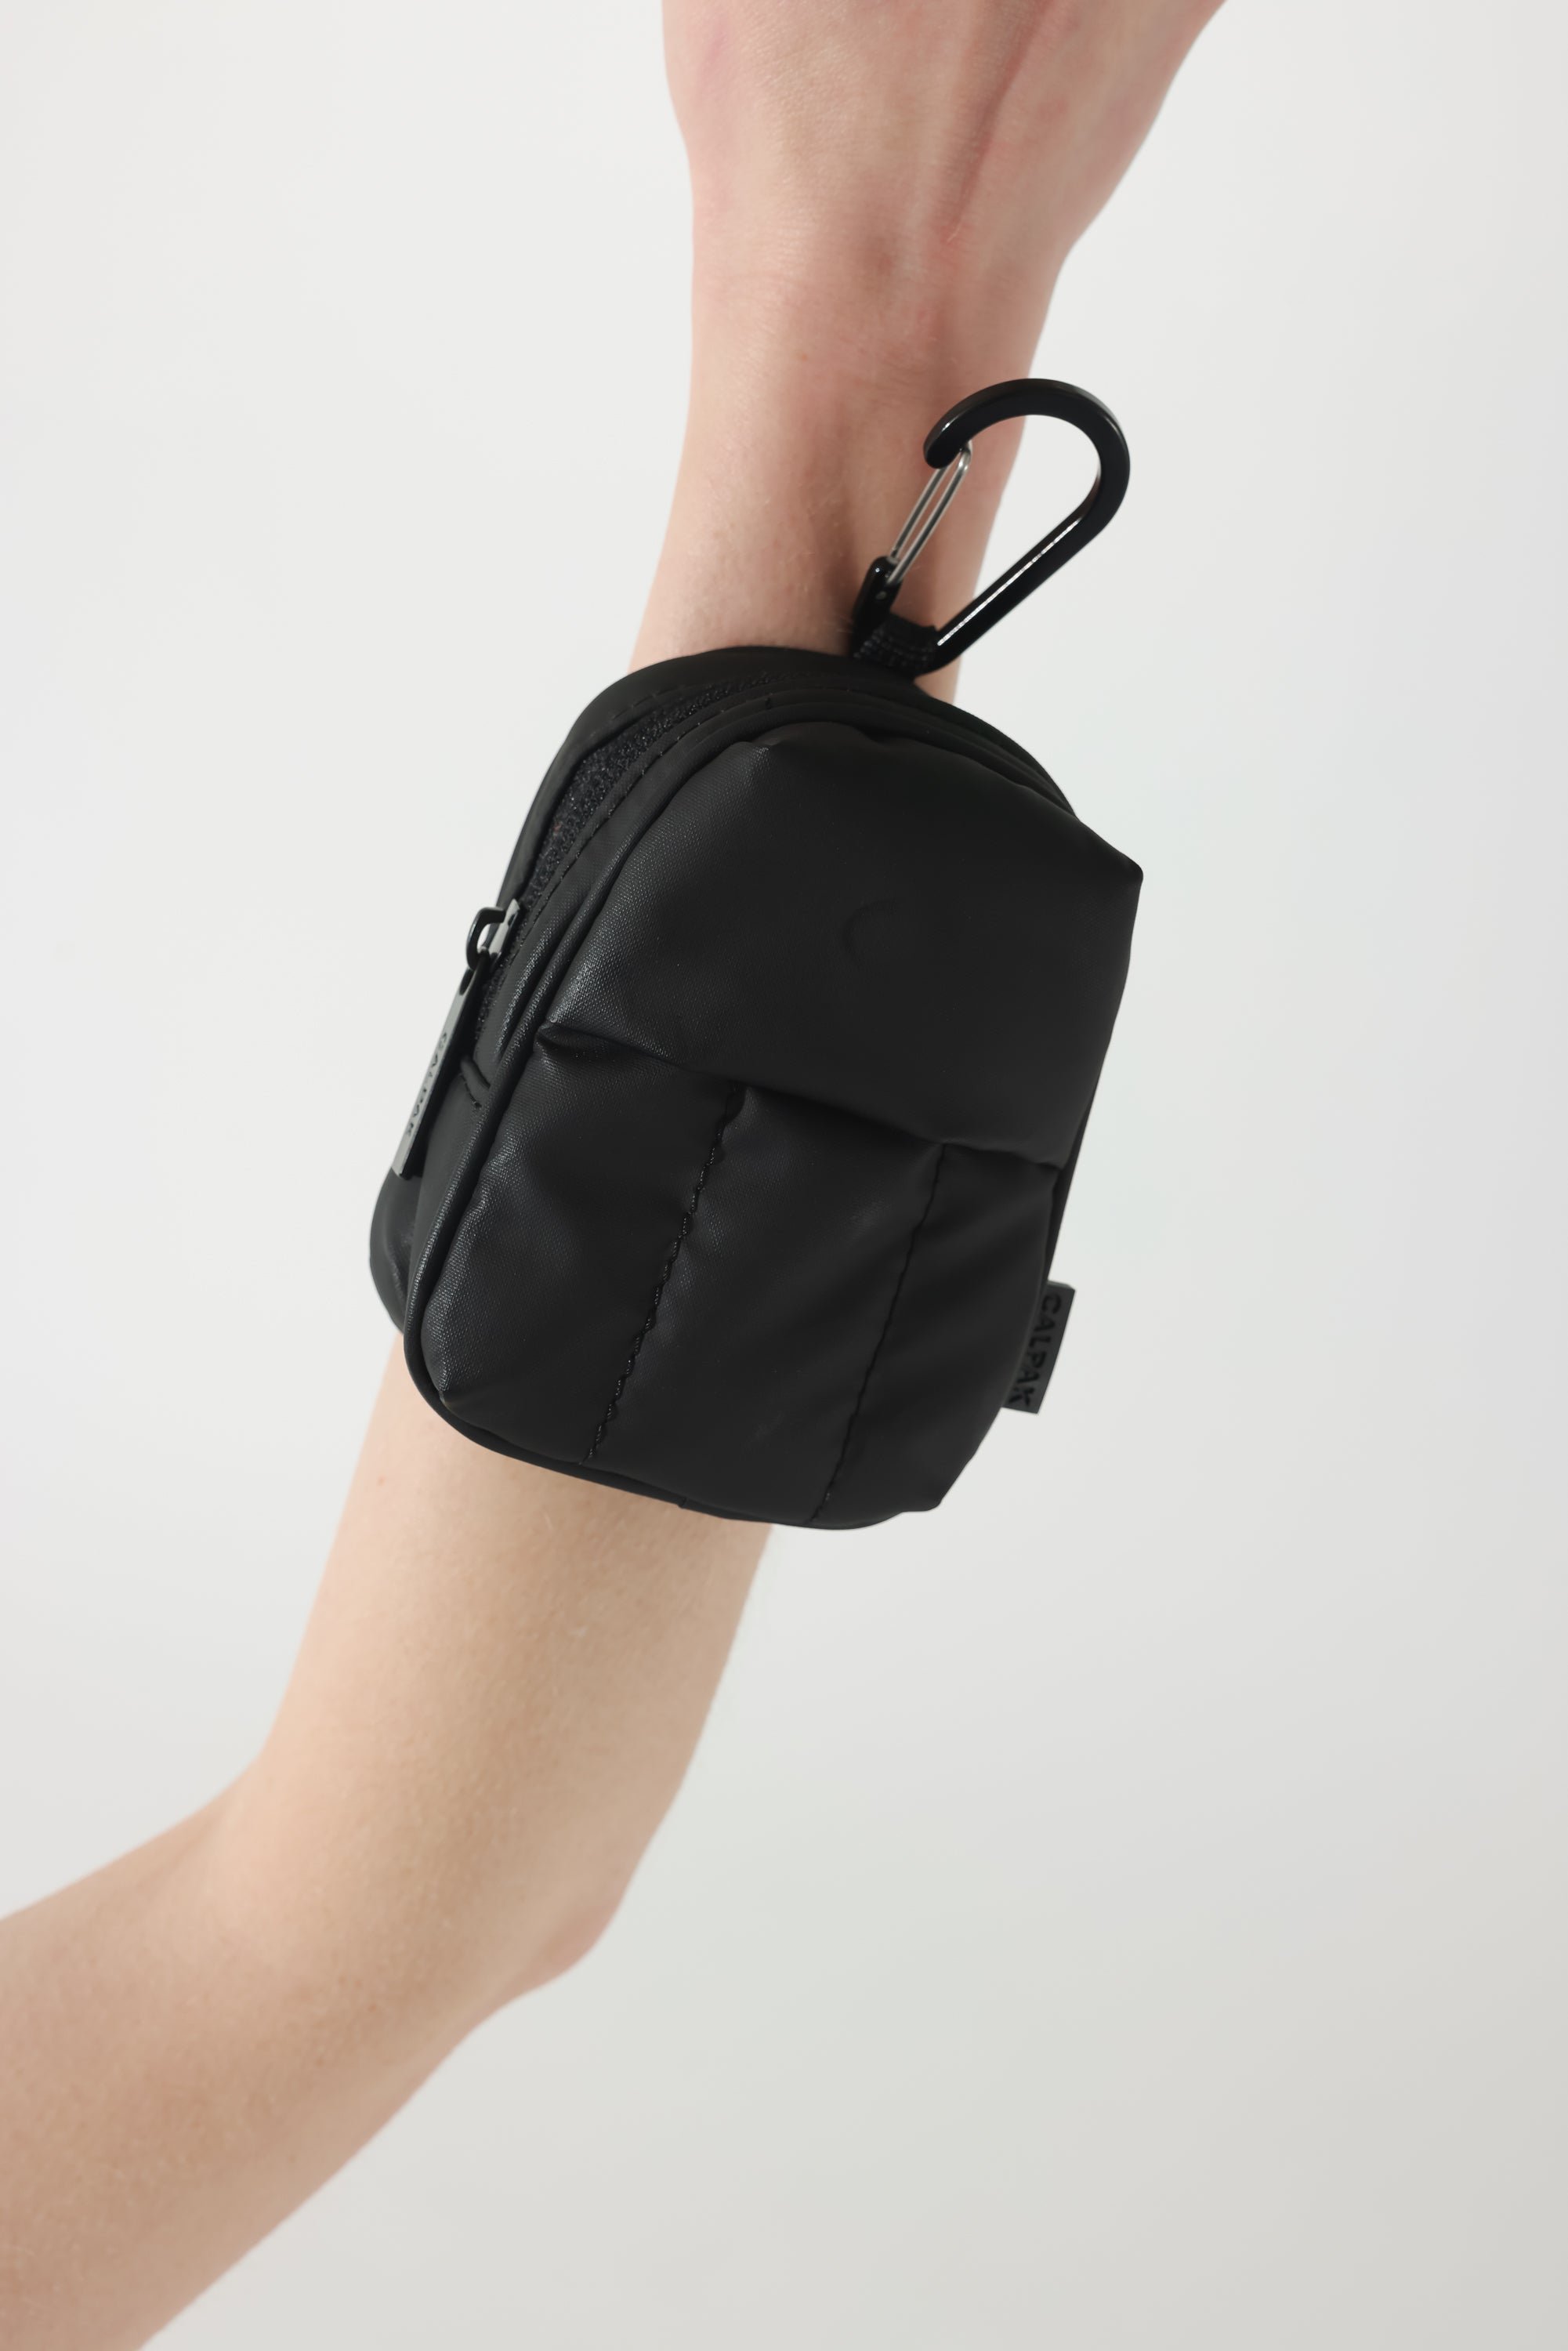 CALPAK Luka backpack key chain with back versatile elastic wrist strap and carabiner clip in matte black